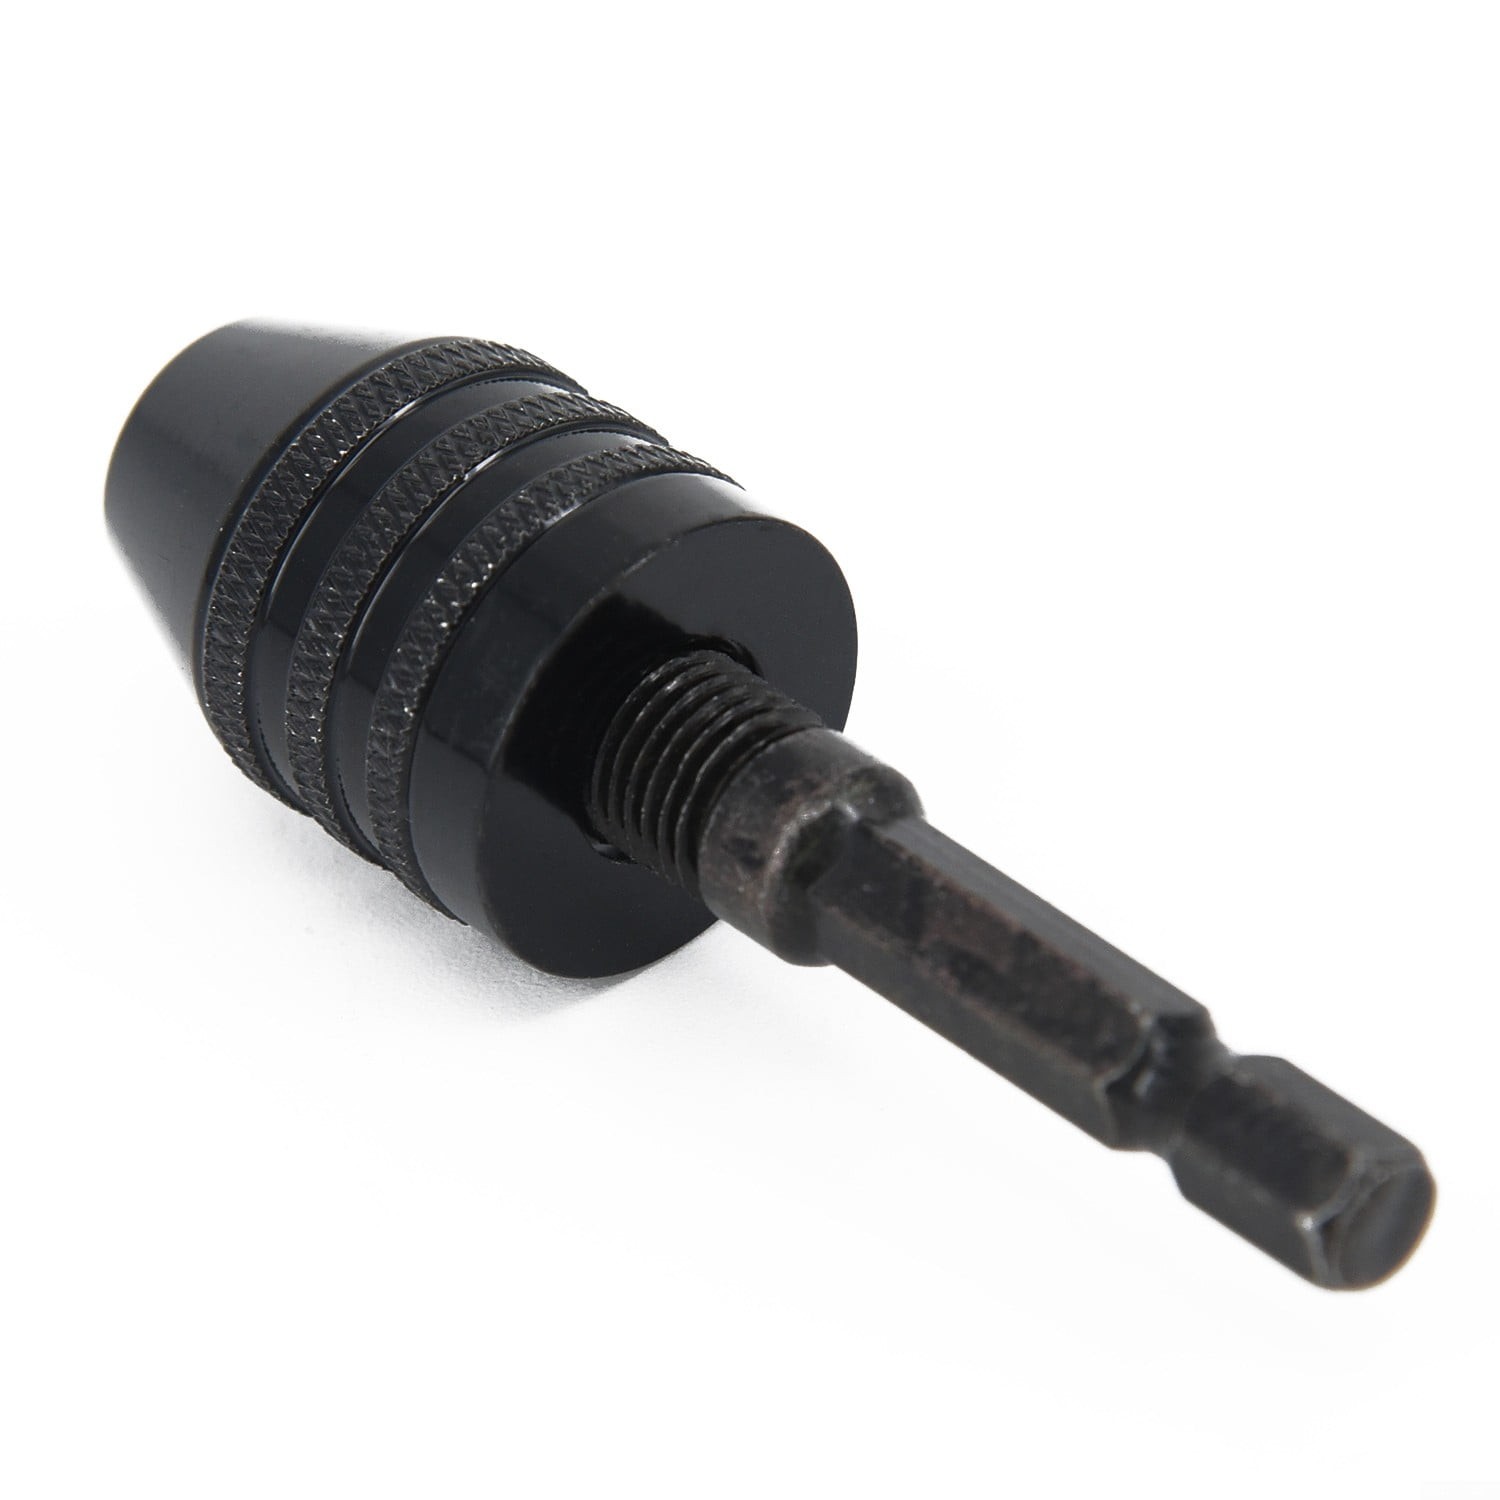 New Mini-Keyless Drill Bit Chuck Adapter Hex Shank For Power Impact-Driver 